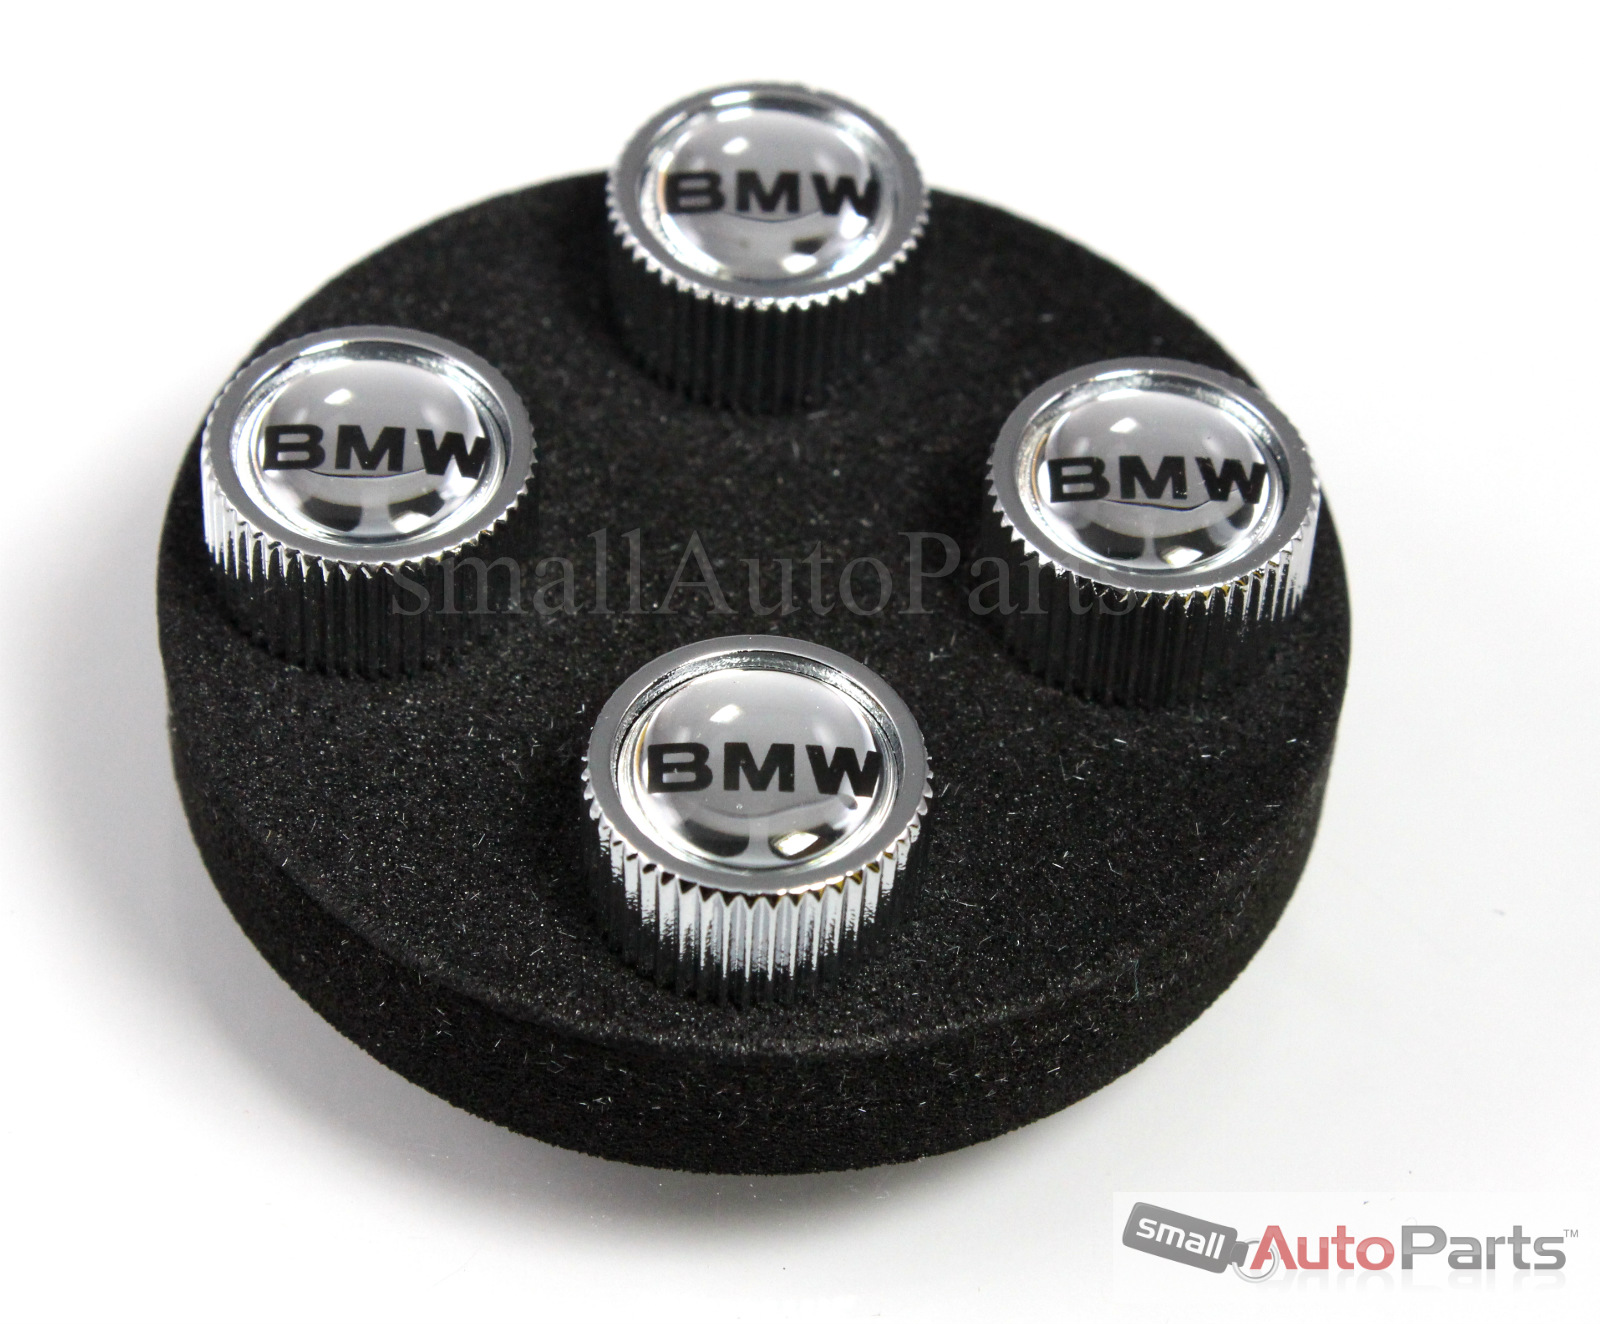 Bmw tire valve covers #6